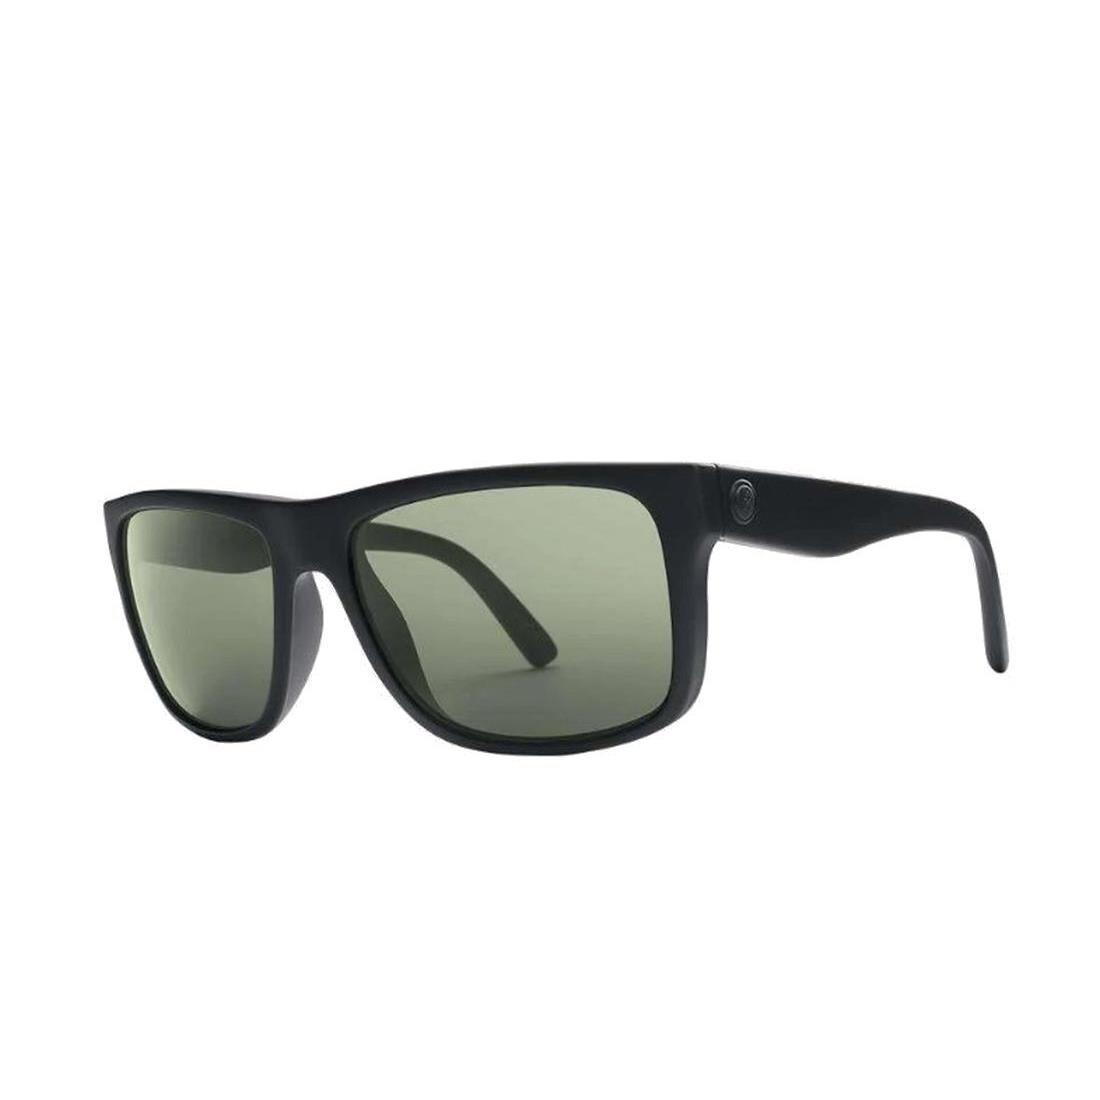 Electric Swingarm Sunglasses Matte Black with Grey Lens